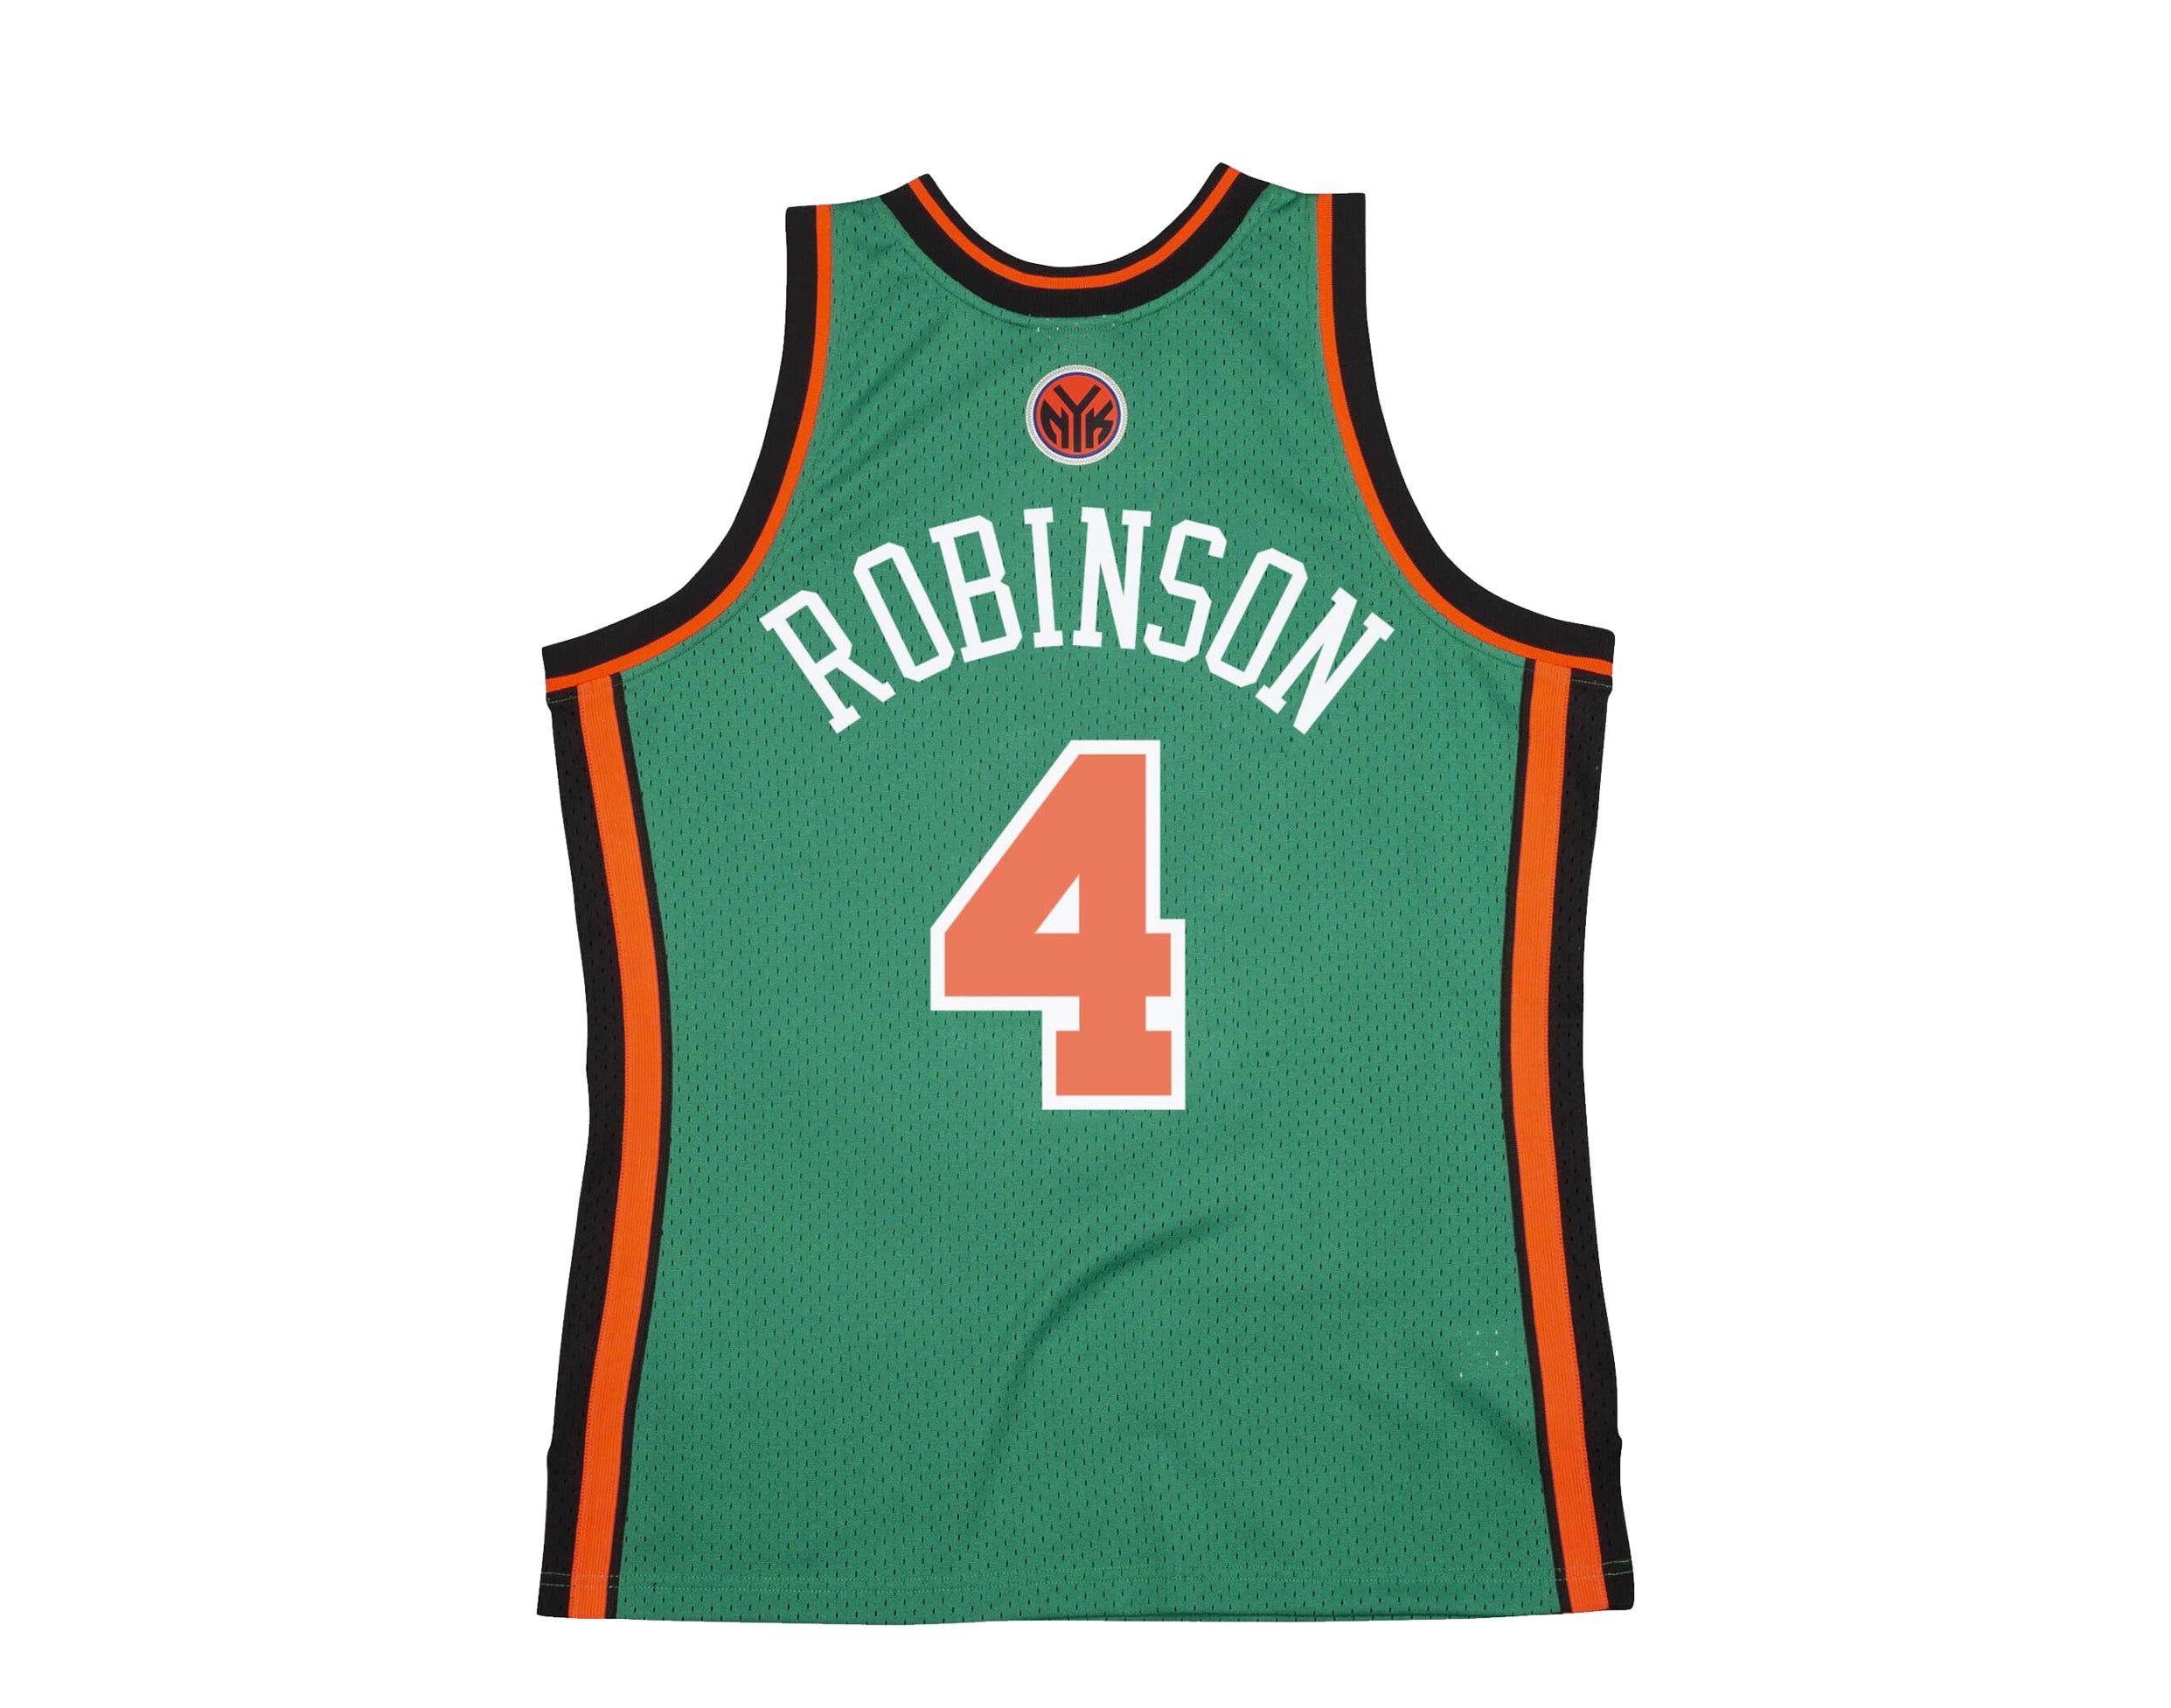  Nate Robinson New York Knicks Green Youth 8-20 Hardwood Classic  Soul Swingman Player Jersey - Large 14-16 : Sports & Outdoors